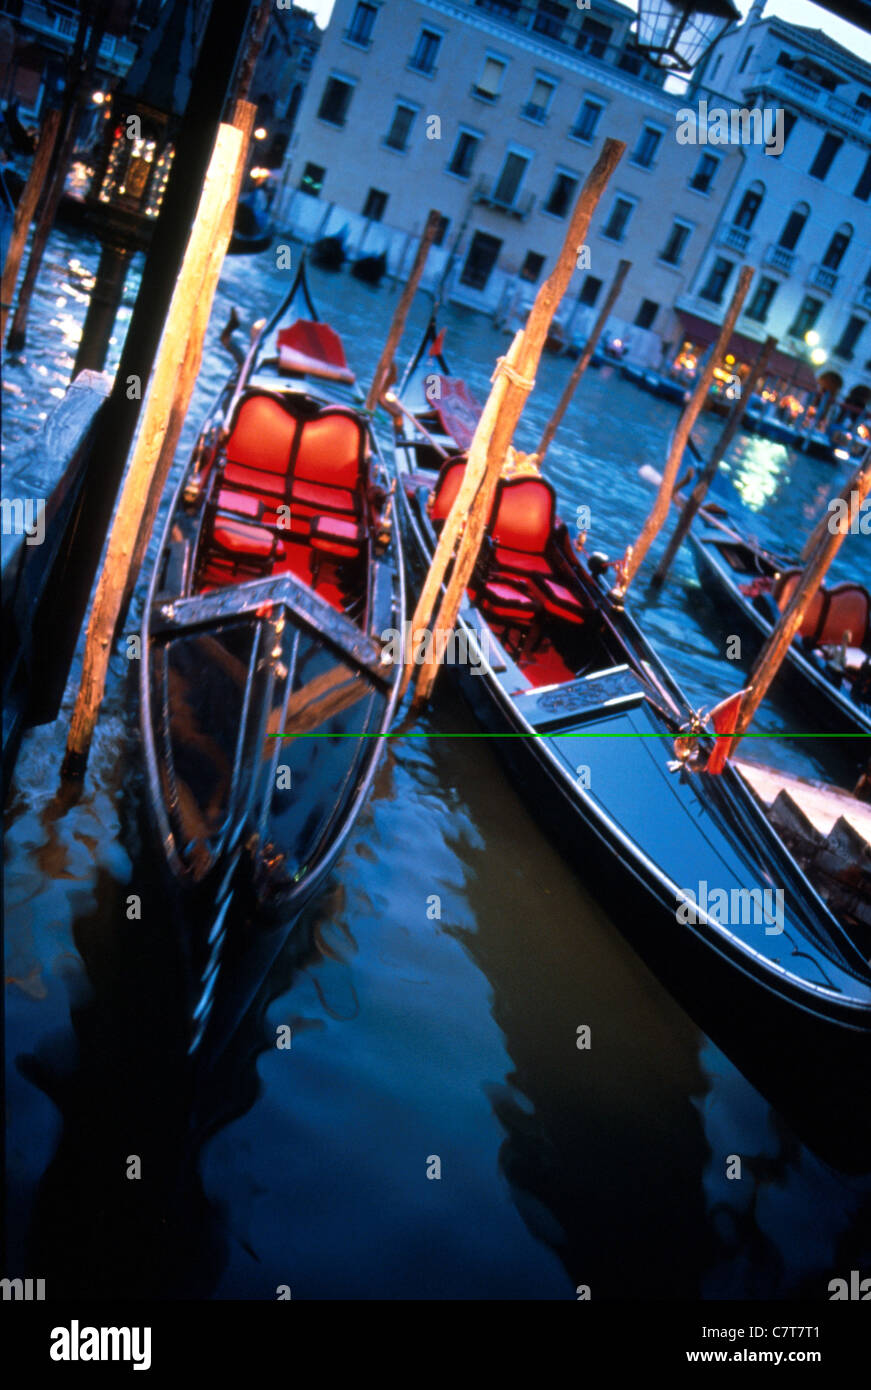 Gondolas in Venice Stock Photo